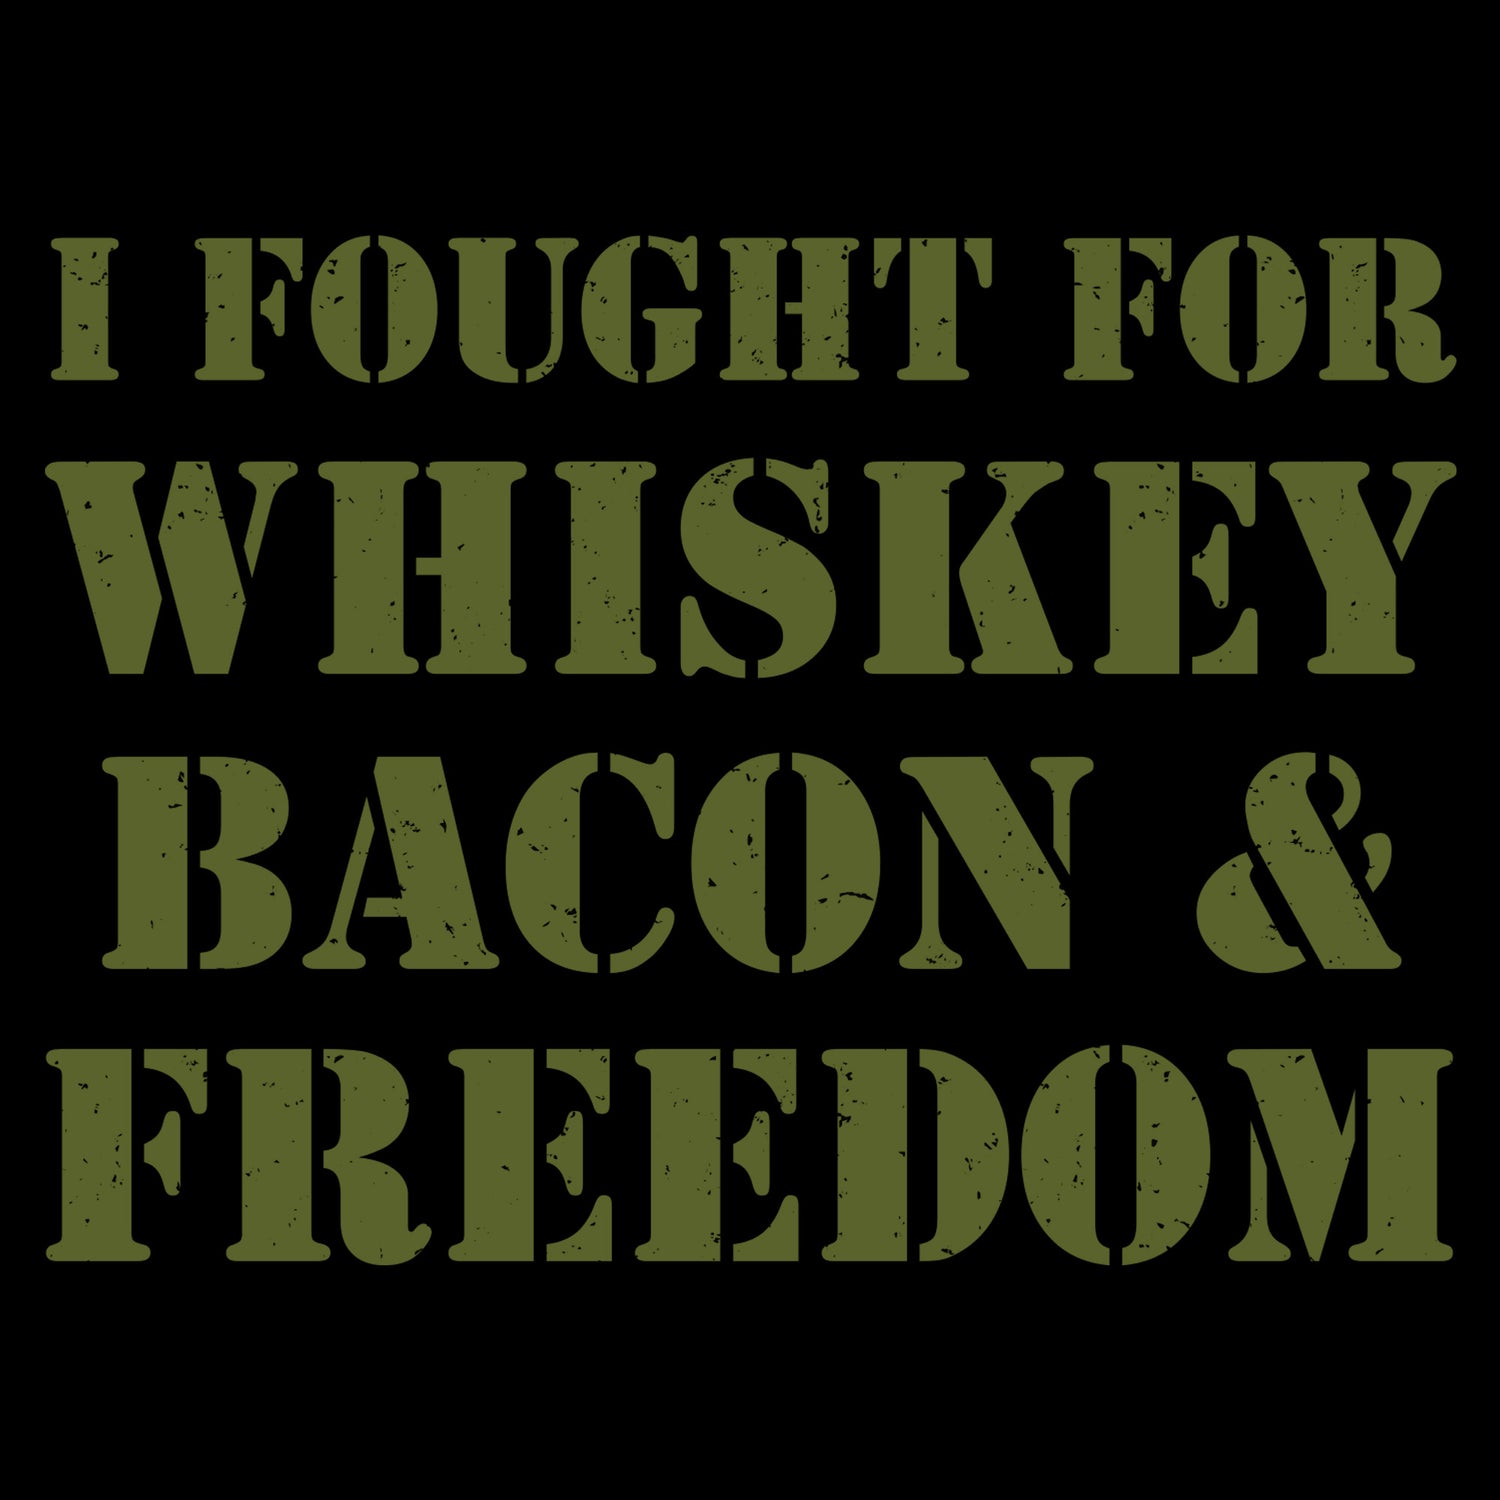  Whiskey, Bacon & Freedom - veteran apparel